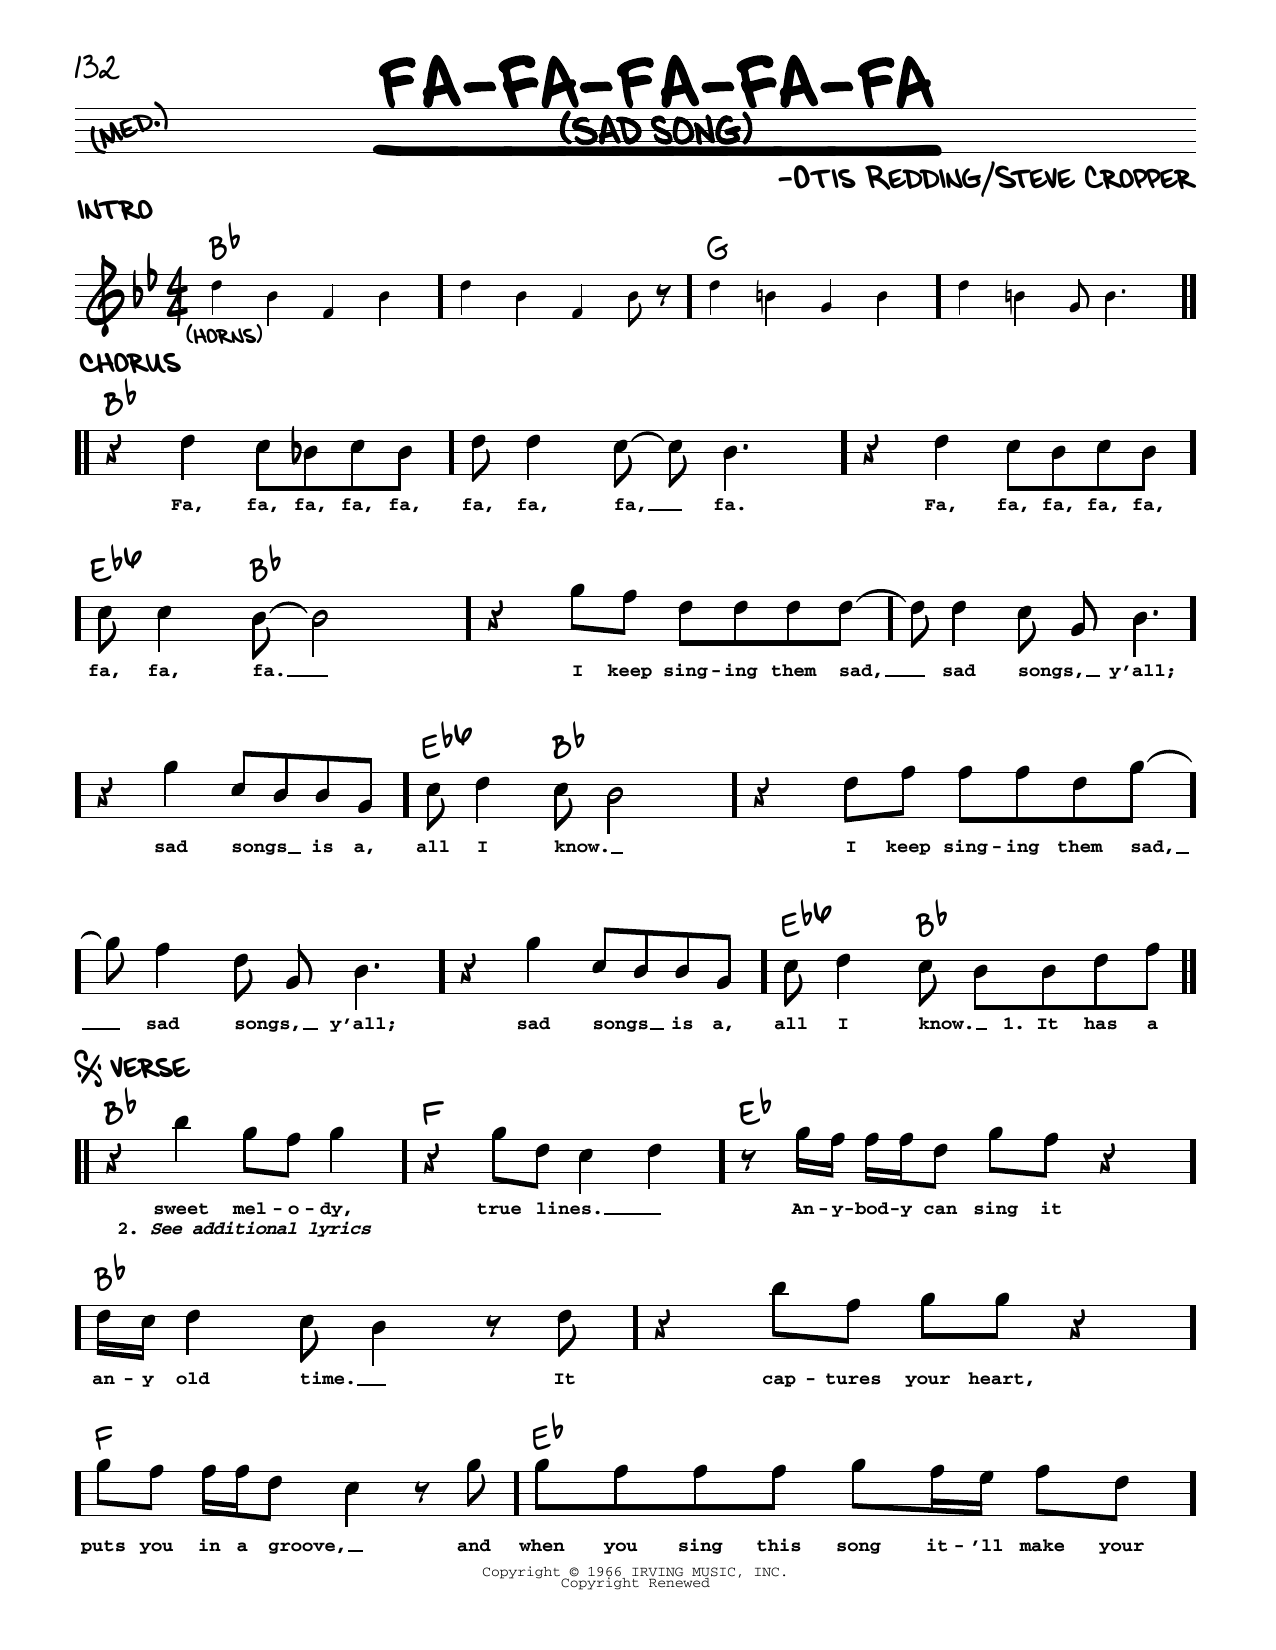 Otis Redding Fa-Fa-Fa-Fa-Fa (Sad Song) Sheet Music Notes & Chords for Real Book – Melody & Chords - Download or Print PDF